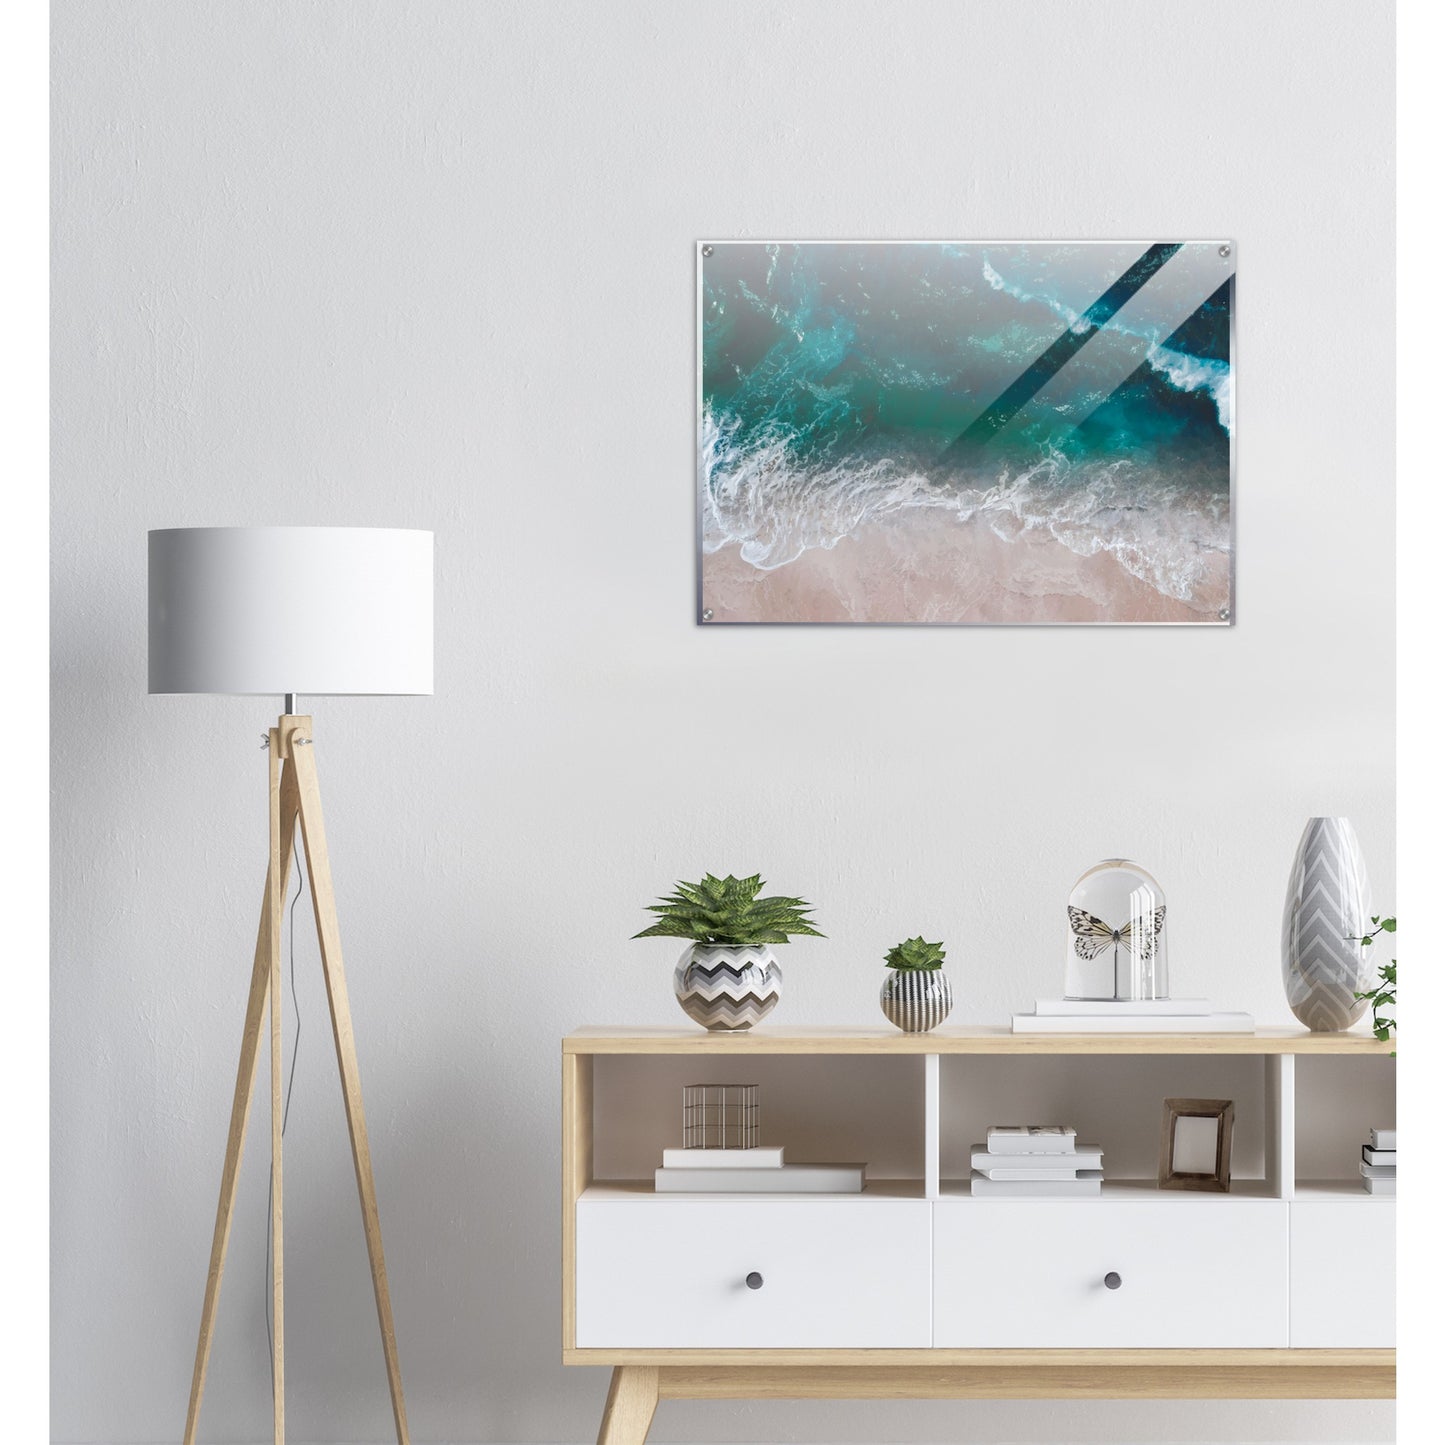 'Ocean View' acrylic print